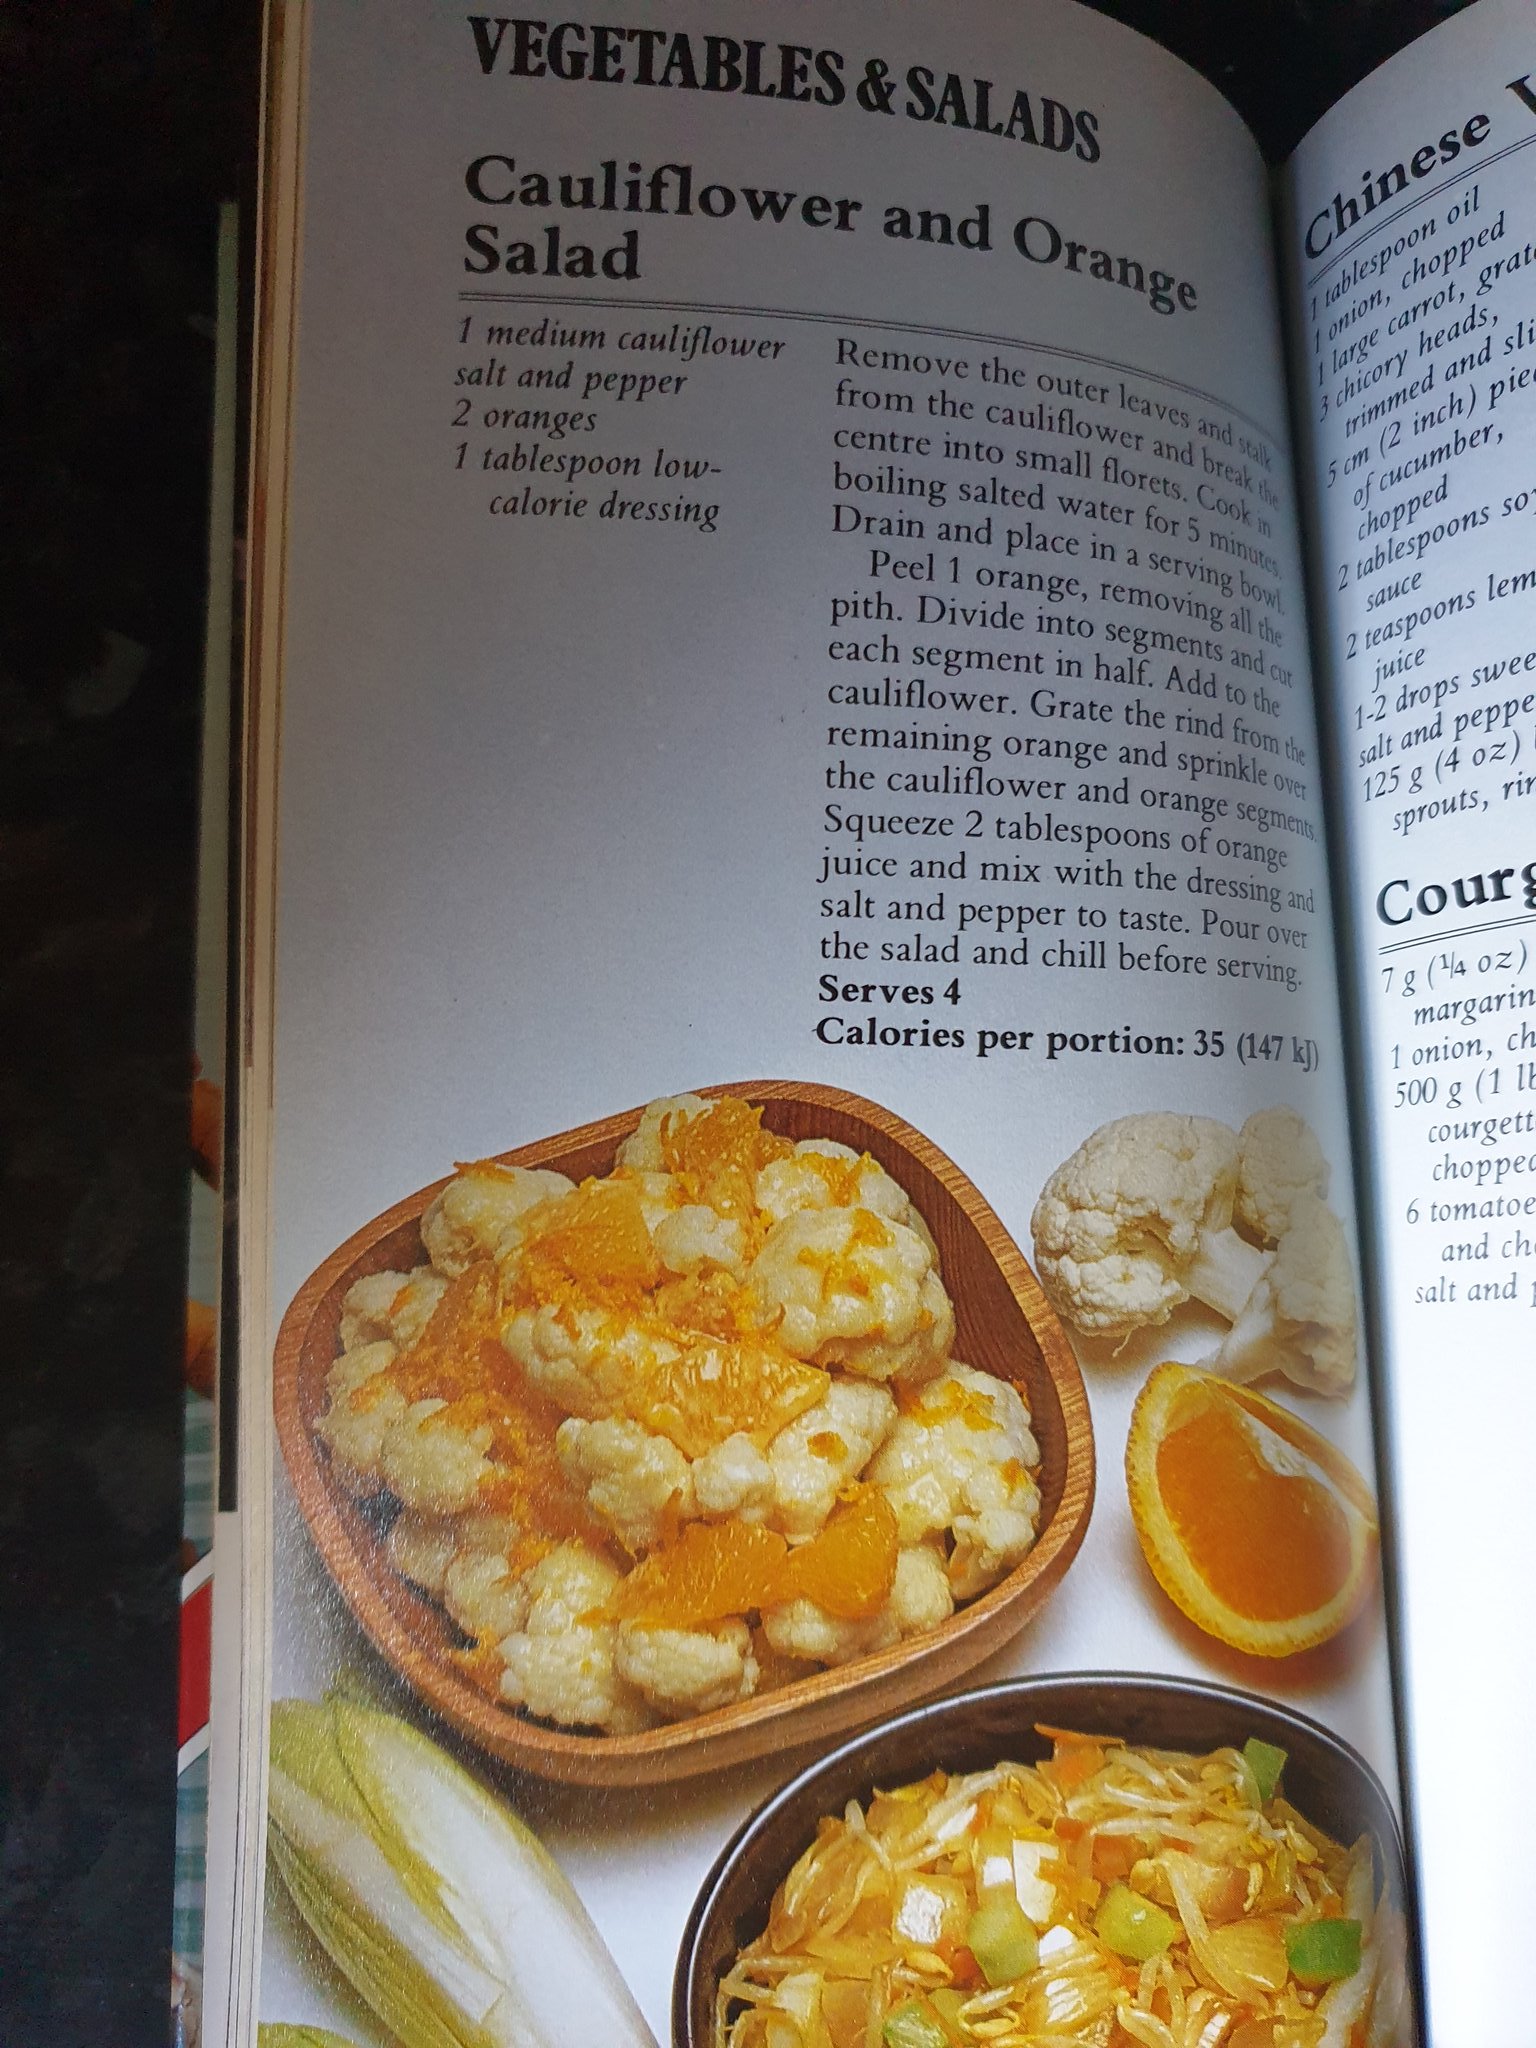 Cauliflower and Orange Salad recipe